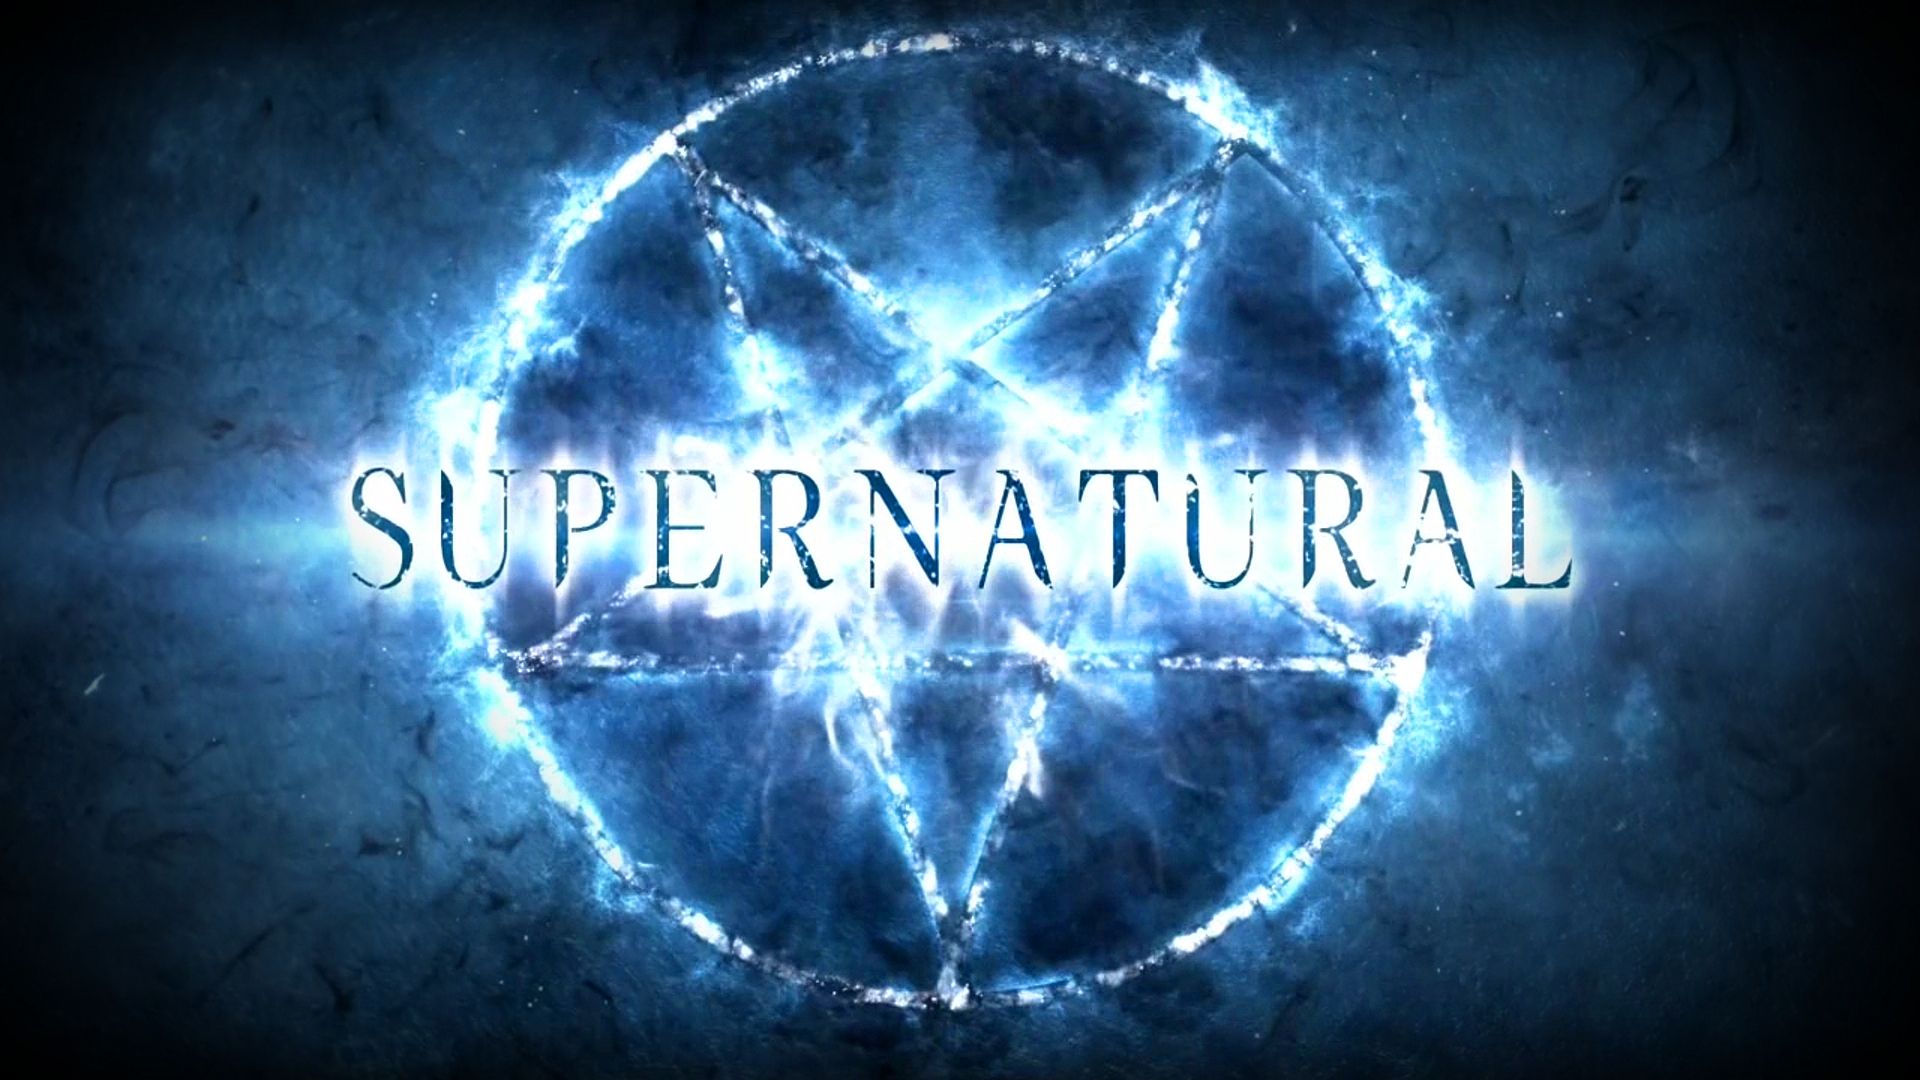 CW Supernatural Wallpaper